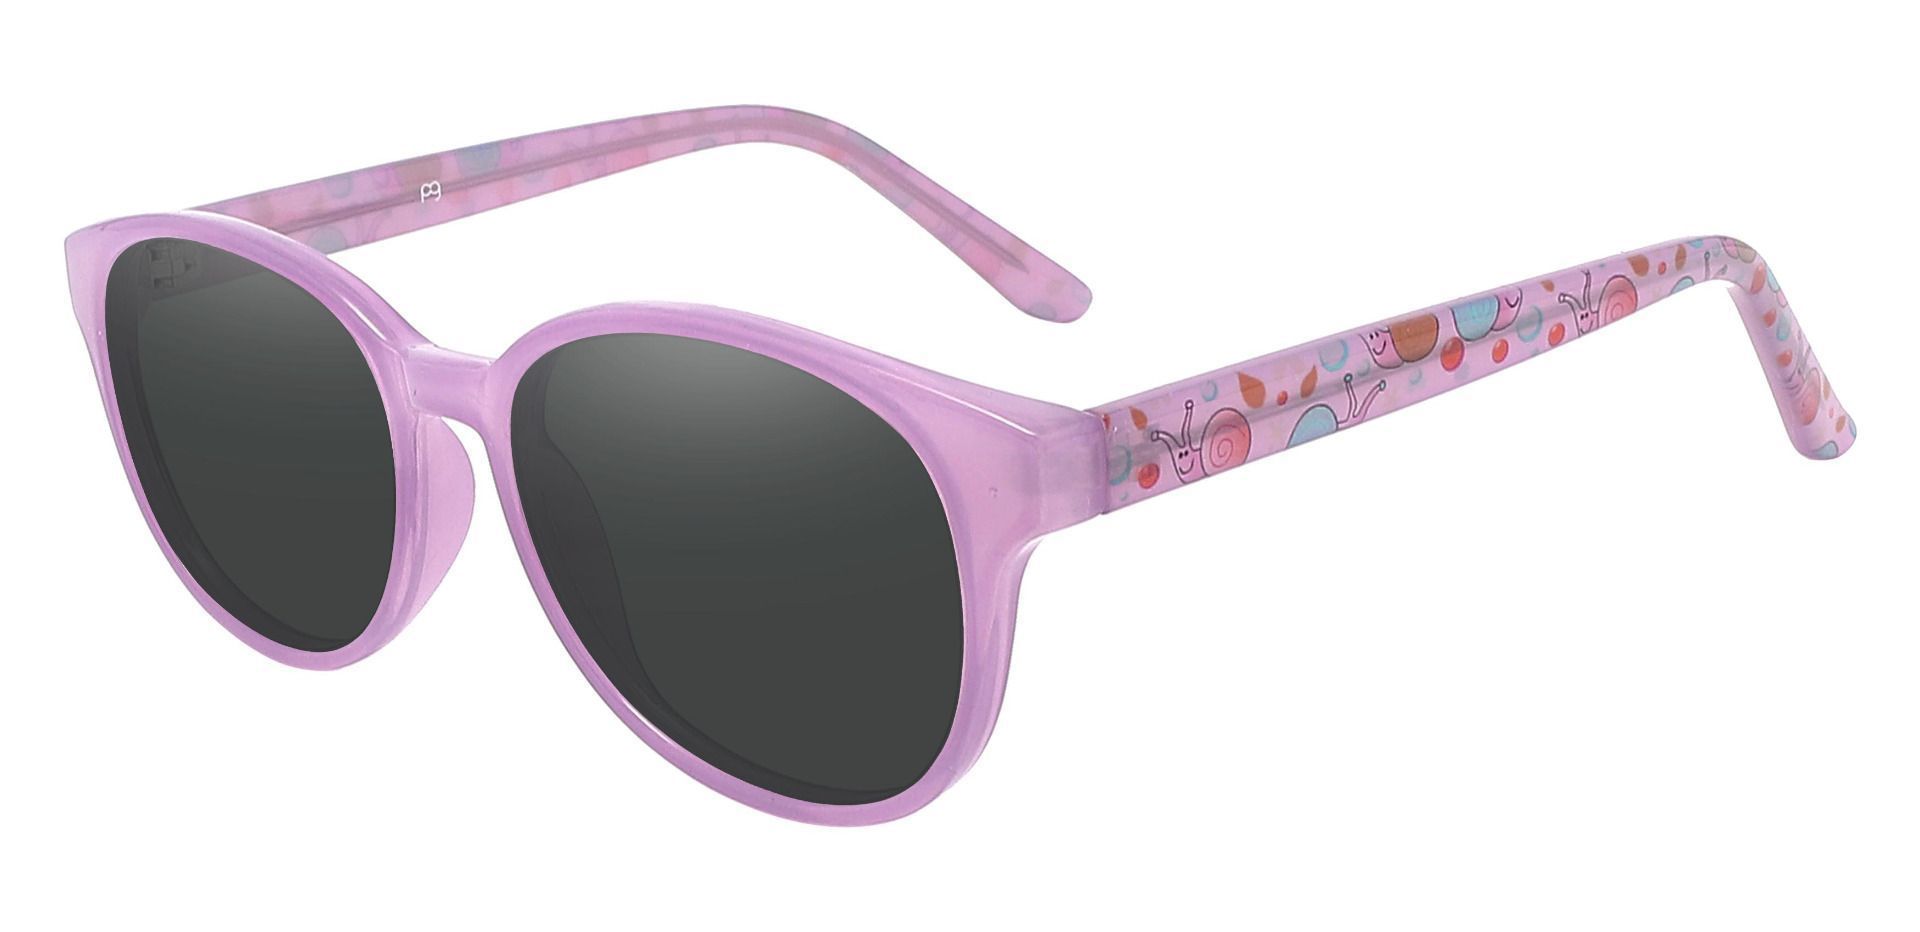 Allegra Oval Prescription Sunglasses - Purple Frame With Gray Lenses